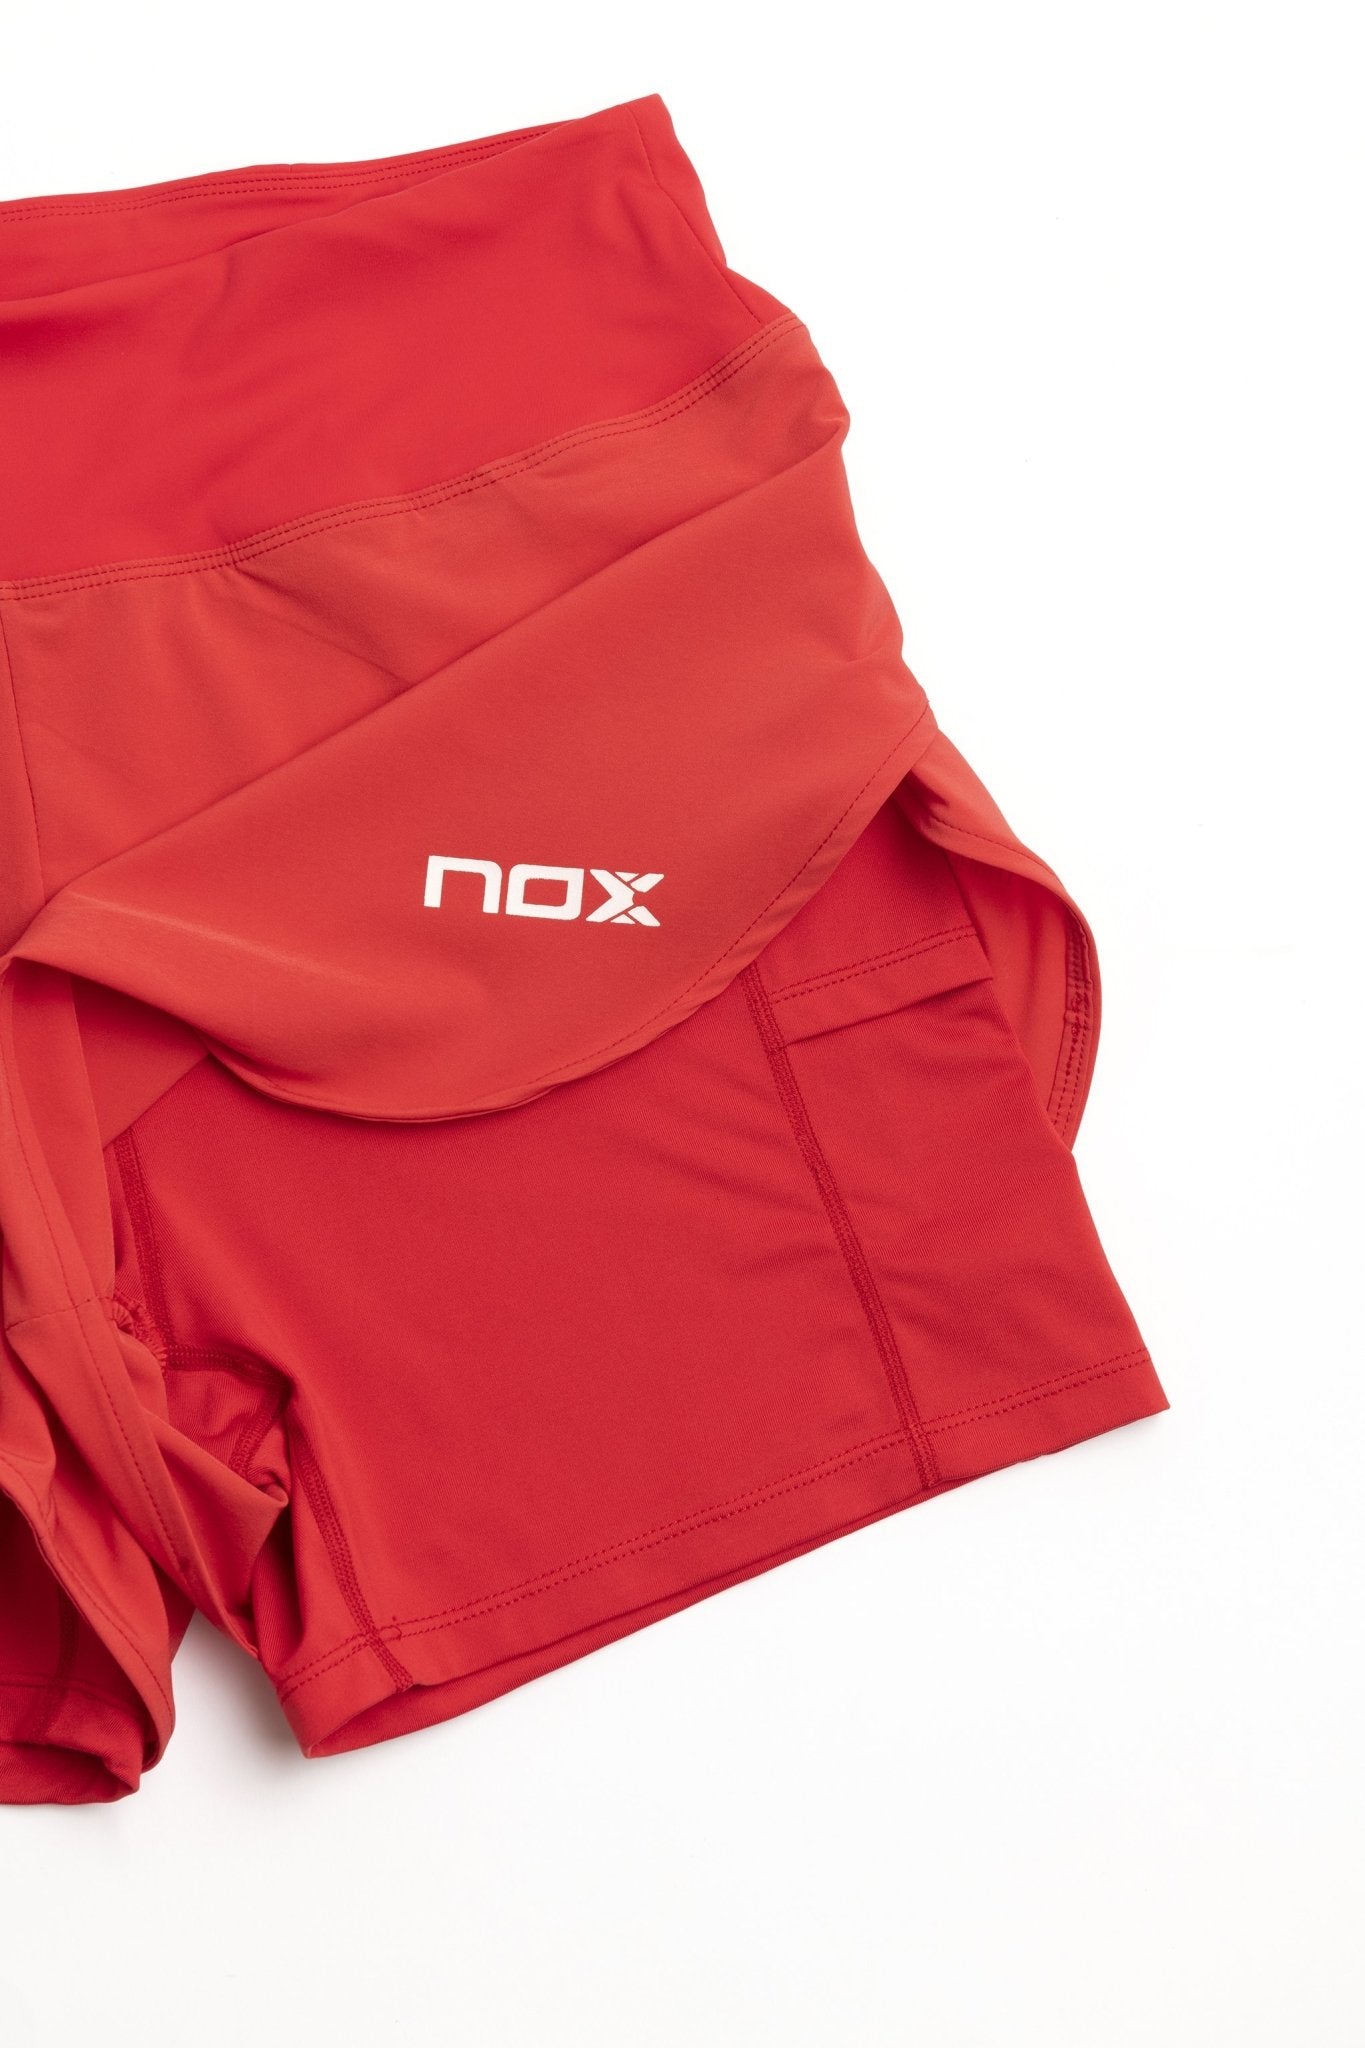 Pantalón pádel mujer PRO rojo - NOX